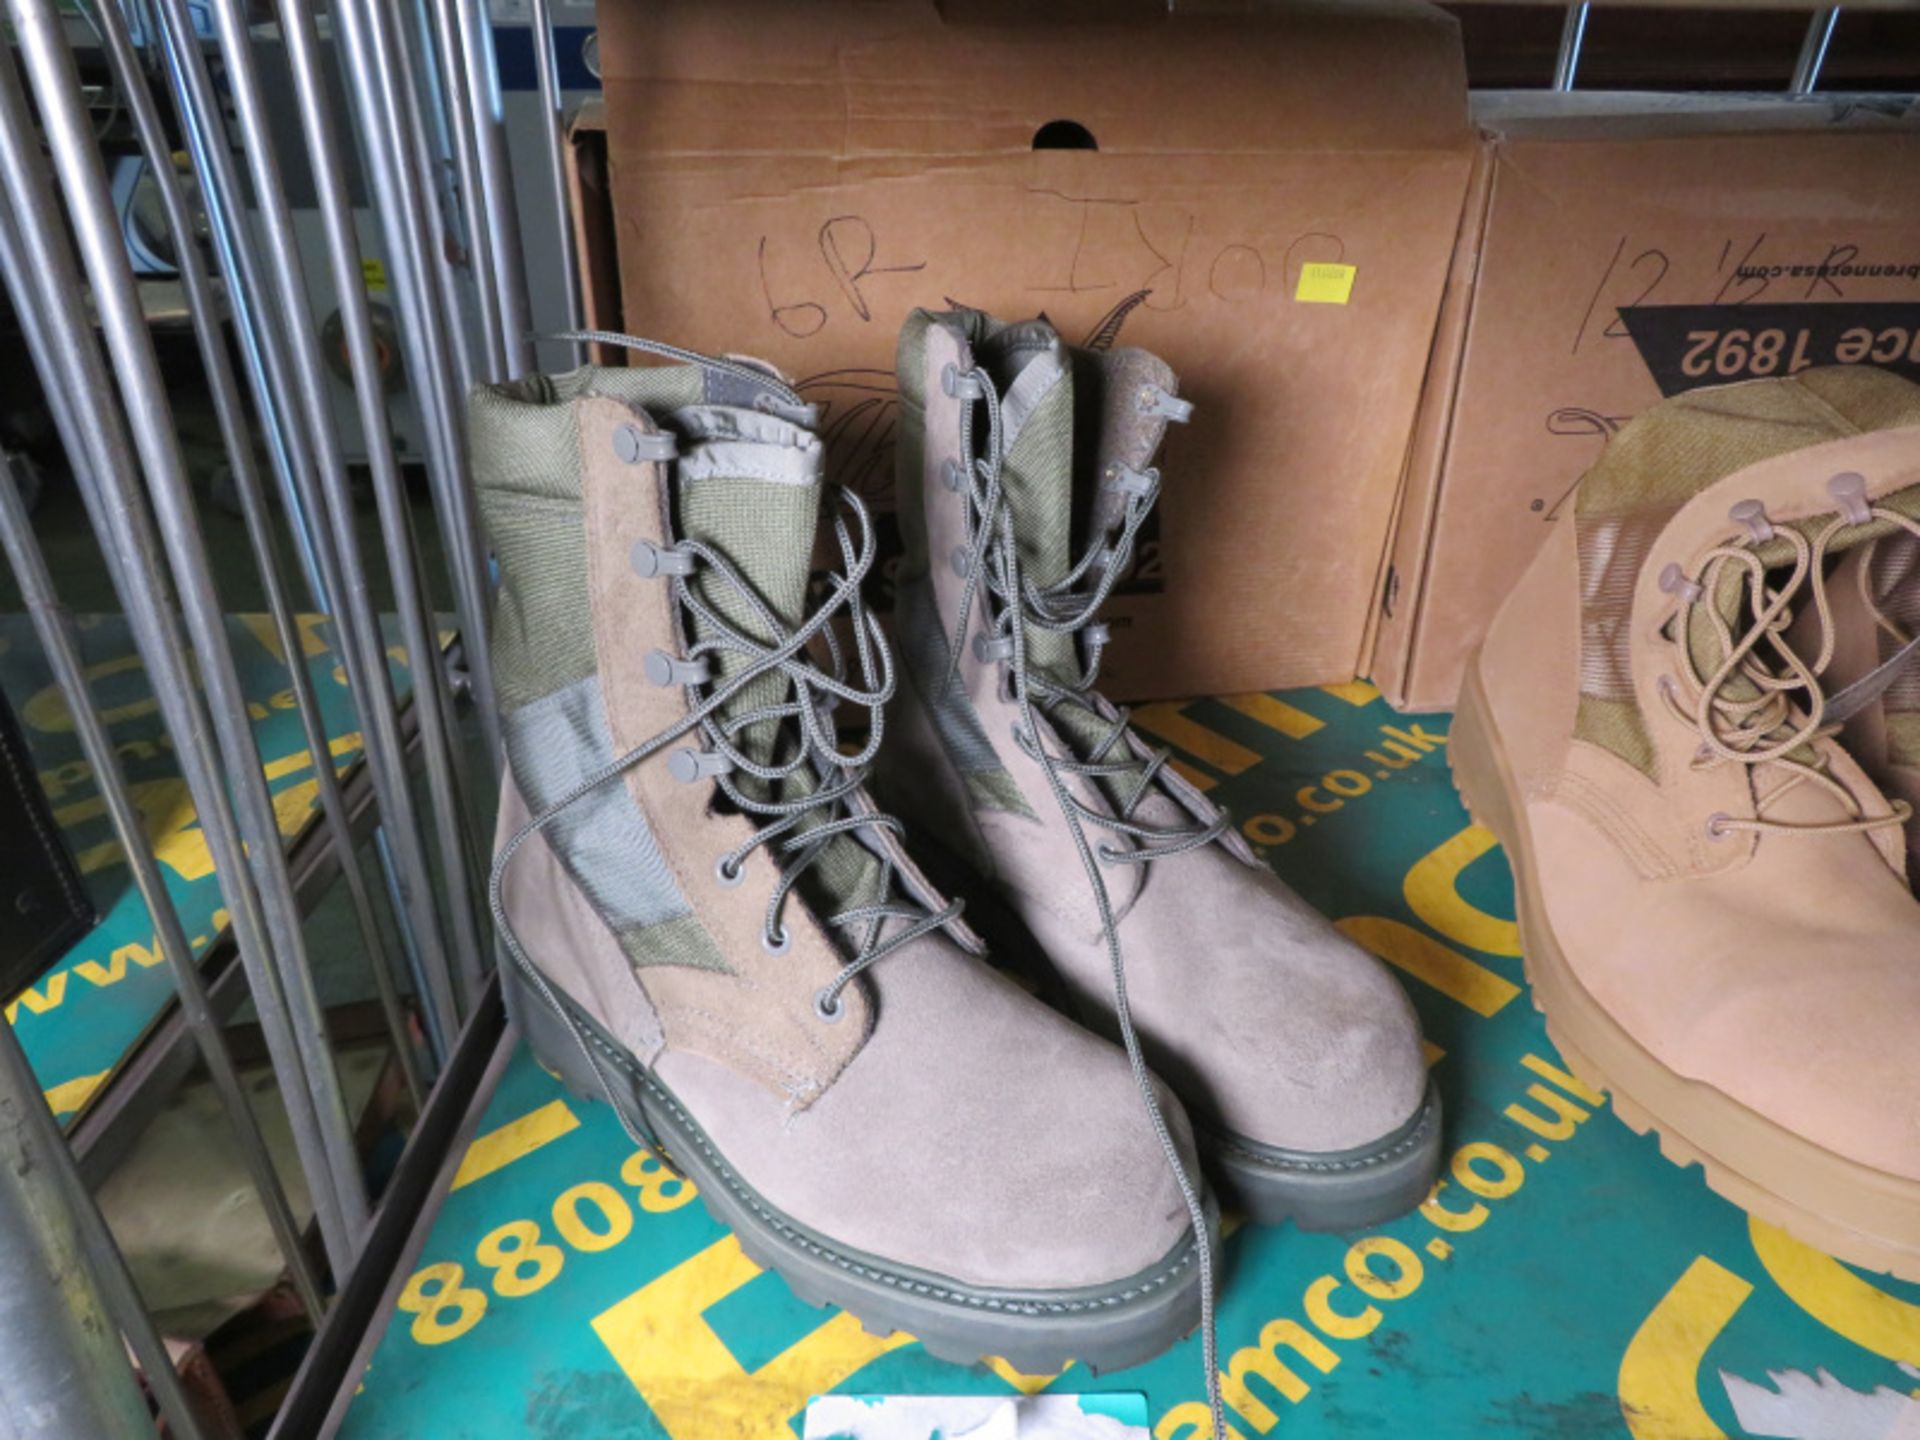 3x Pairs Hot Weather Boots (6 R - Sage, 12.5 R - Desert Tan, 7 R - Sage) - Image 2 of 7